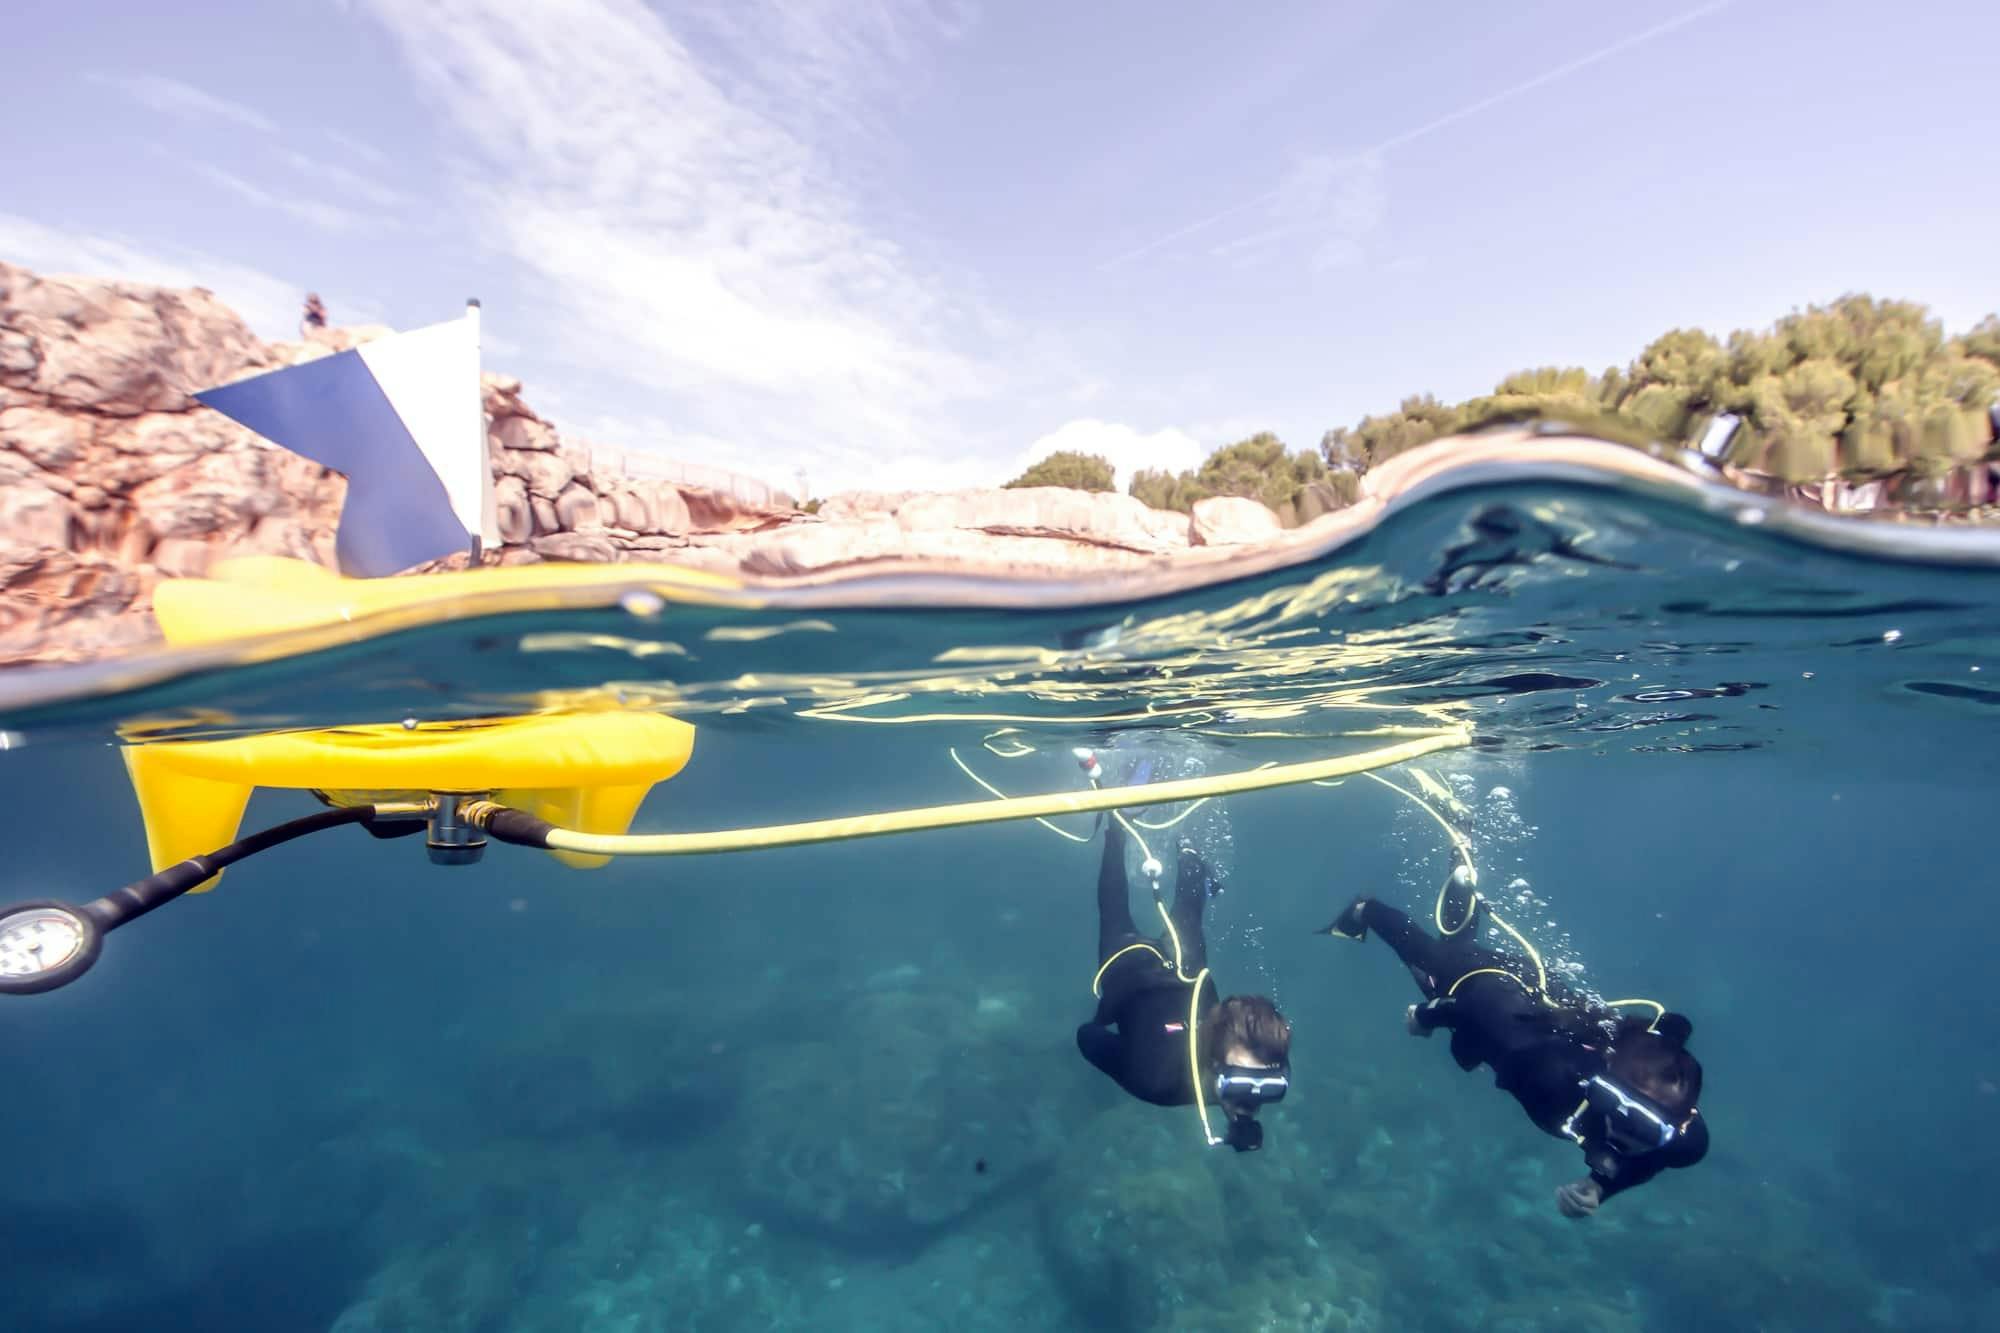 Nurkowanie z systemem Peter Diving na wyspie Lobos